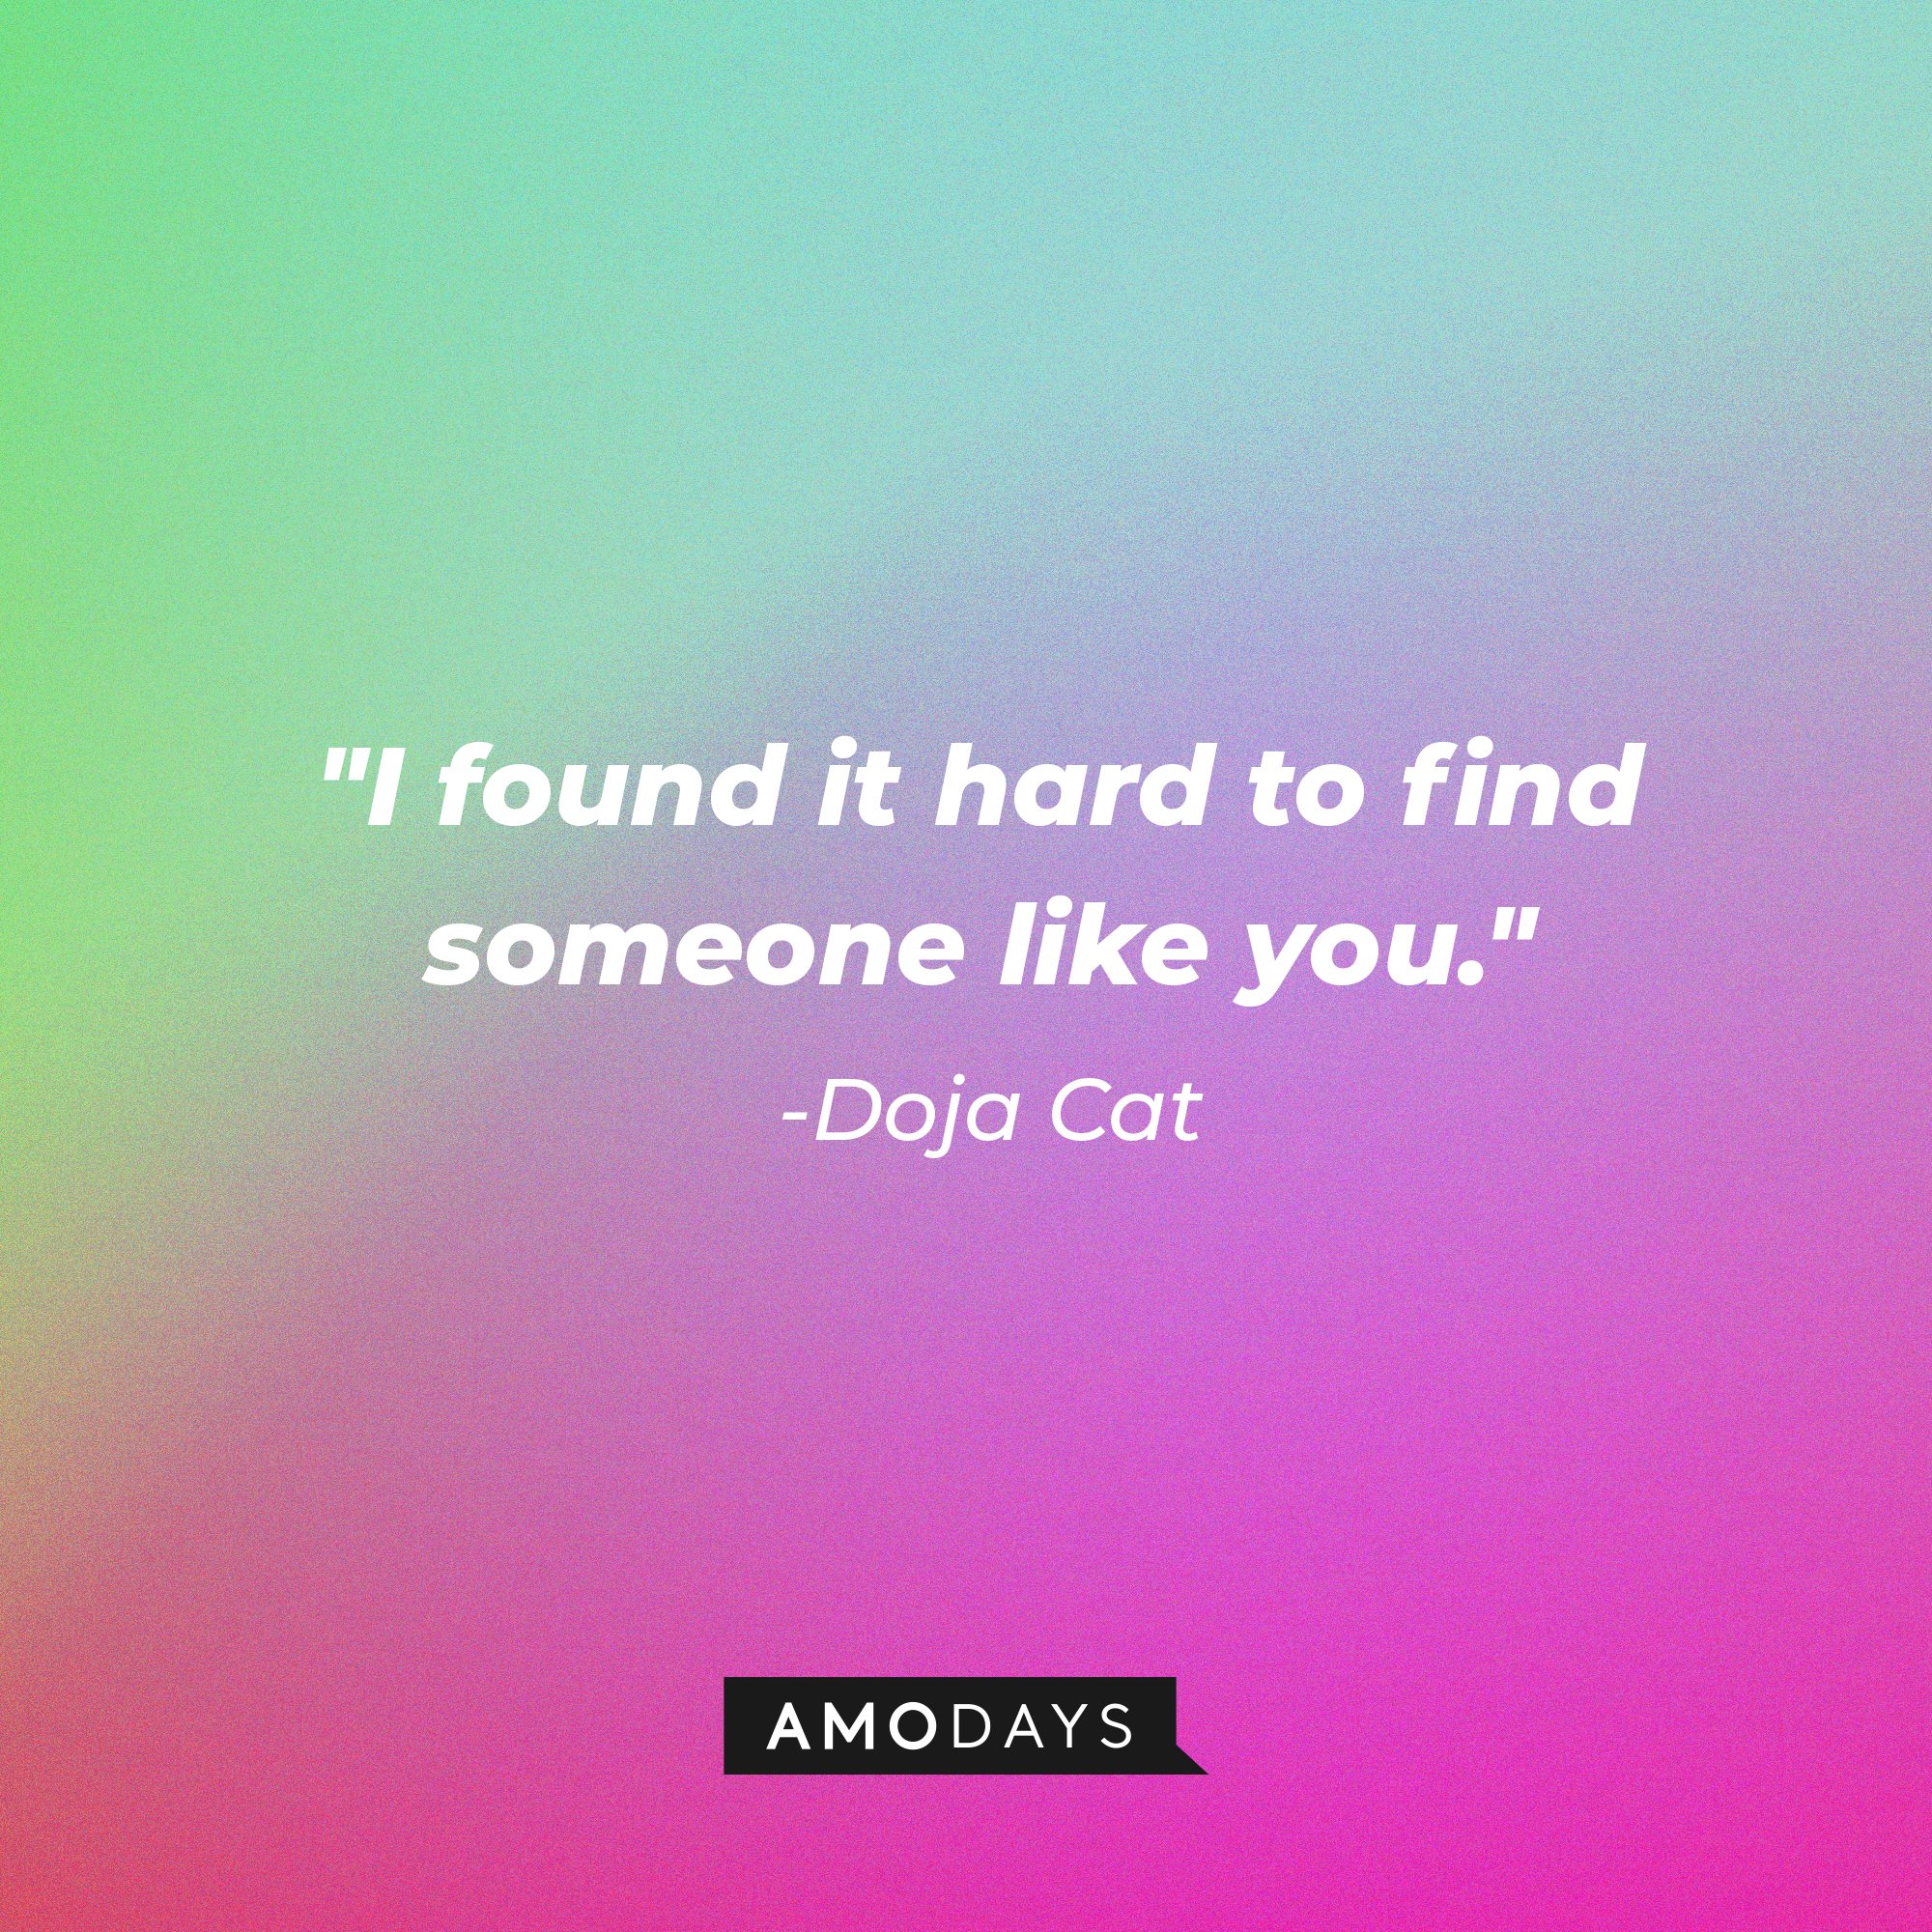 Doja Cat's quote: "I found it hard to find someone like you." | Image: AmoDays